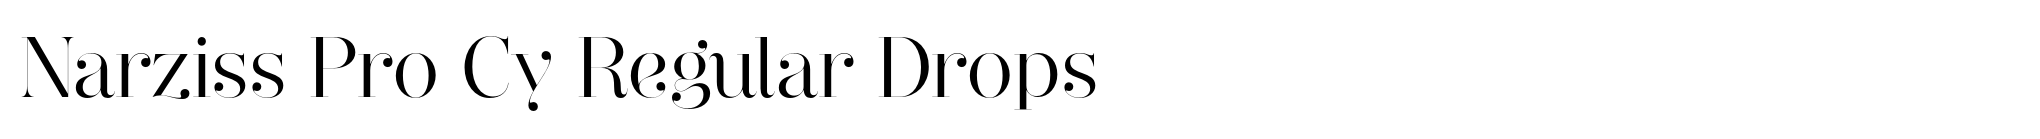 Narziss Pro Cy Regular Drops image